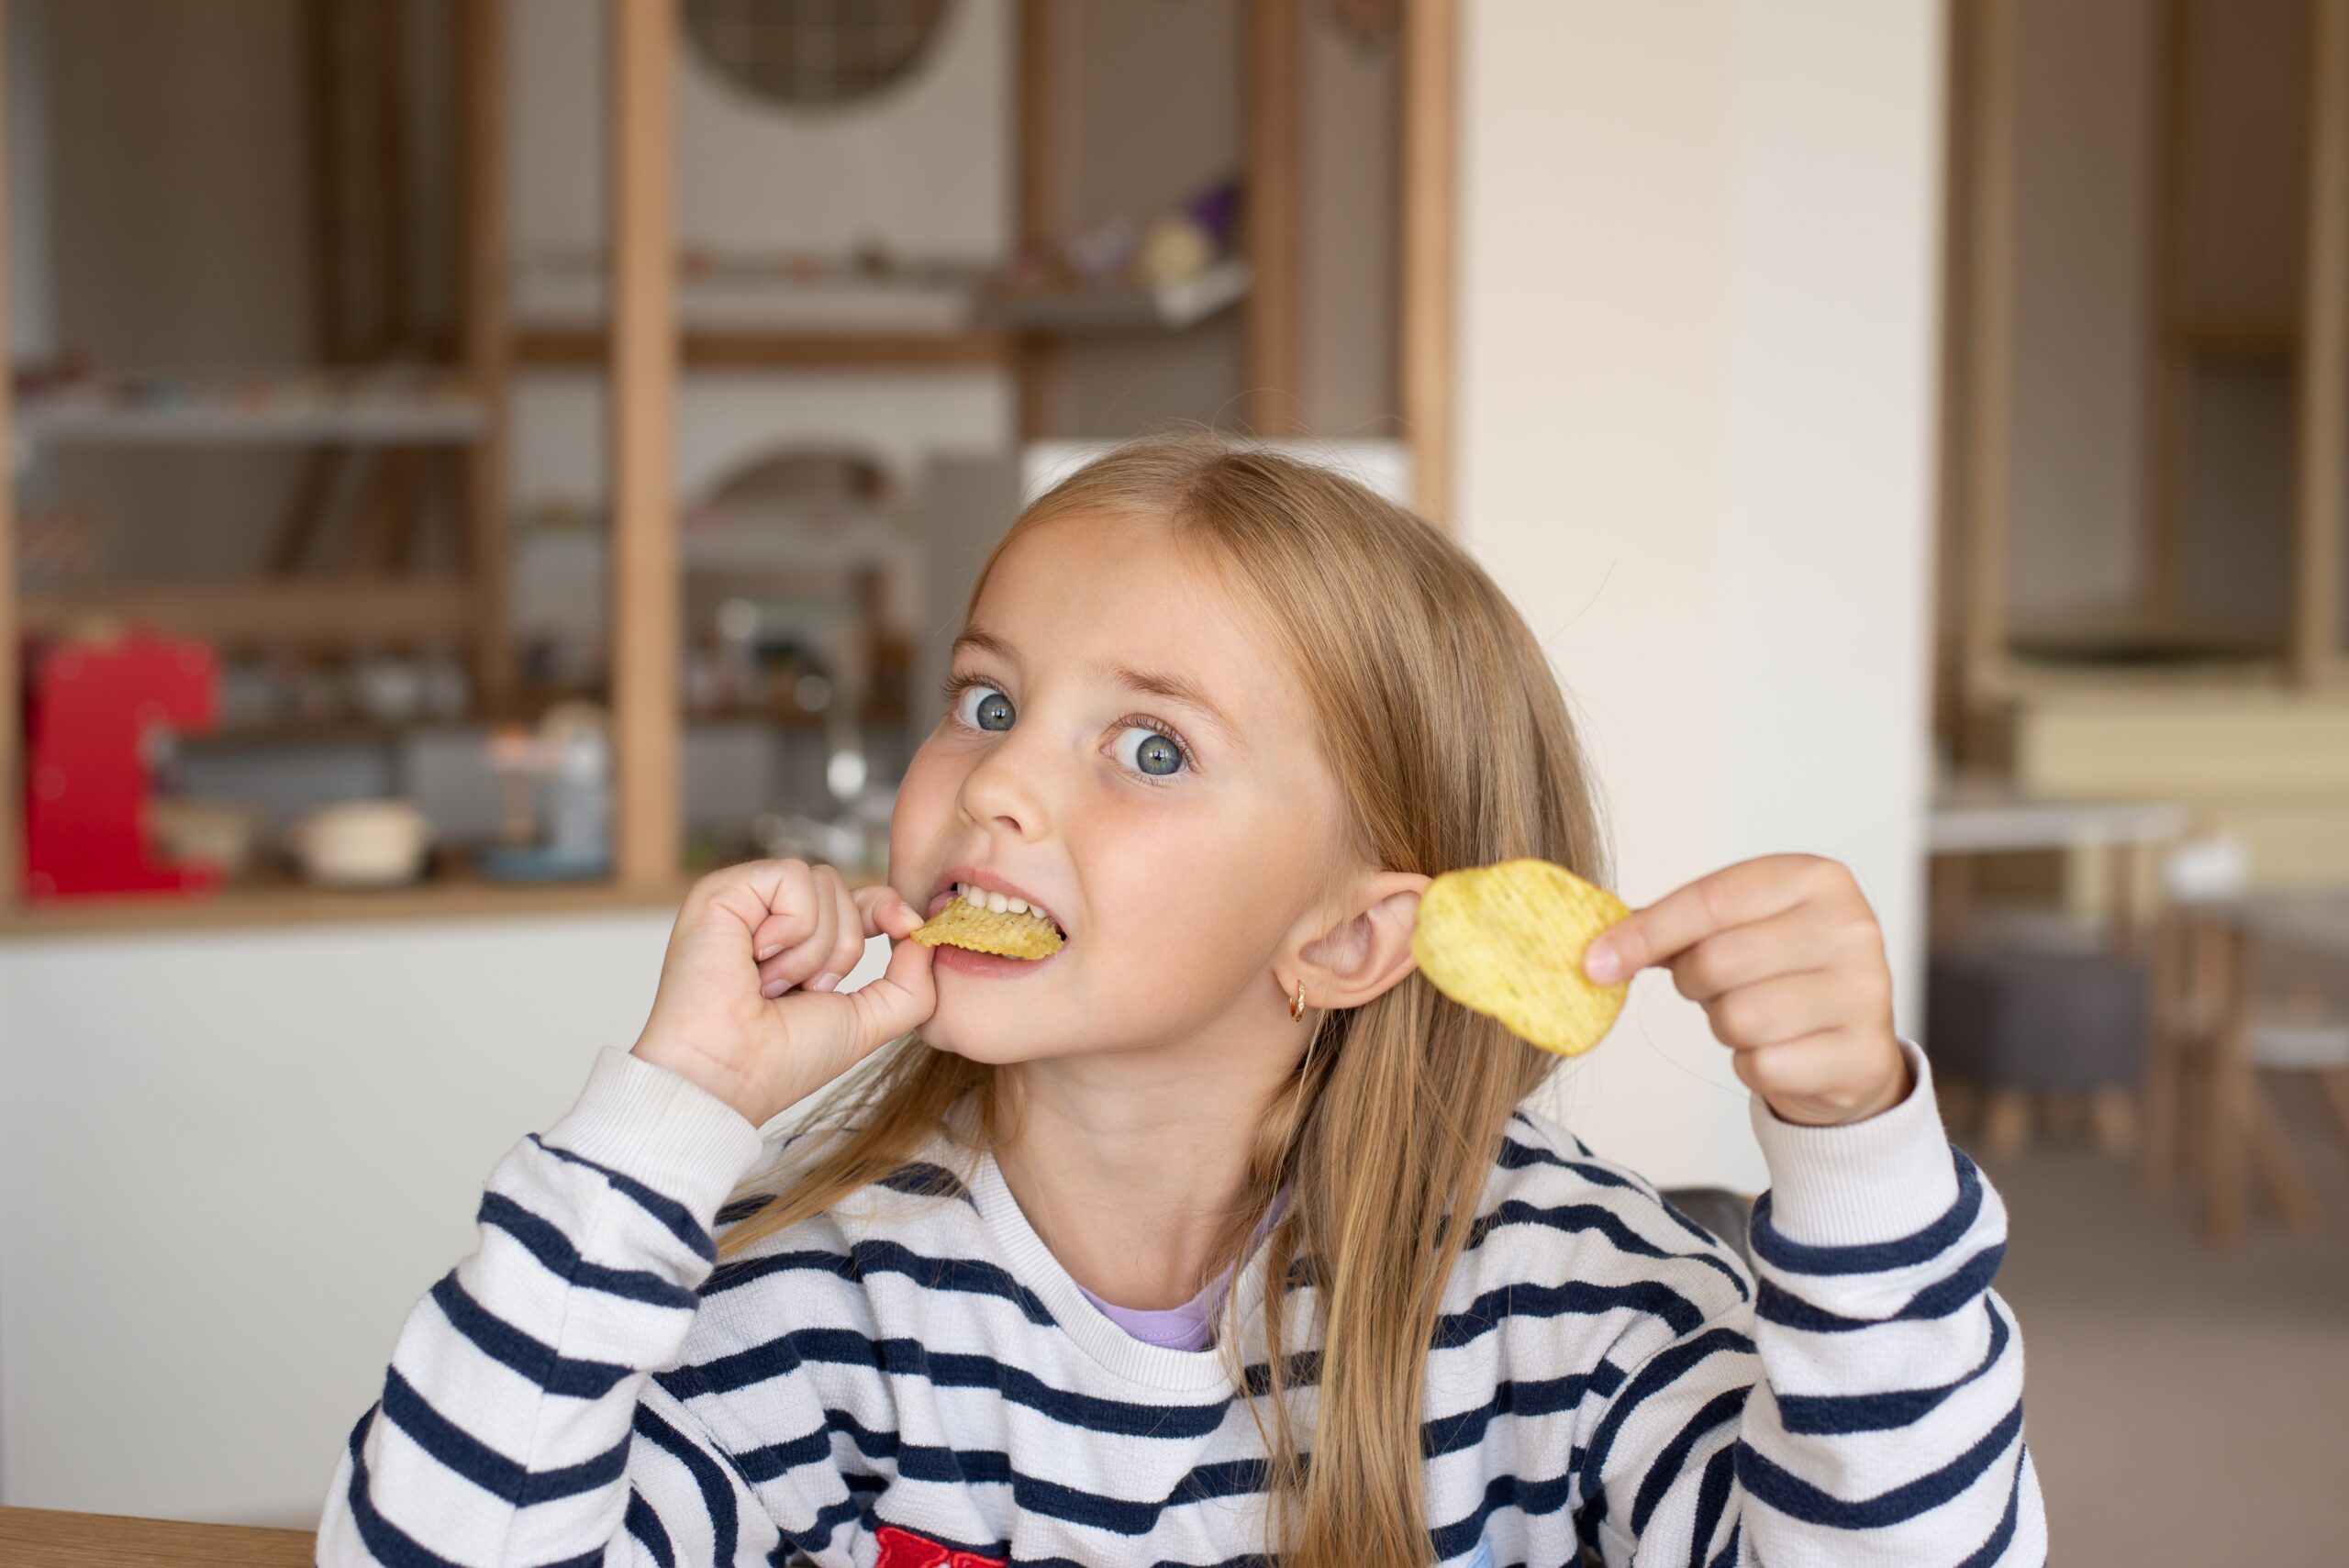 A little girl eating her snacks | Source: Shutterstock